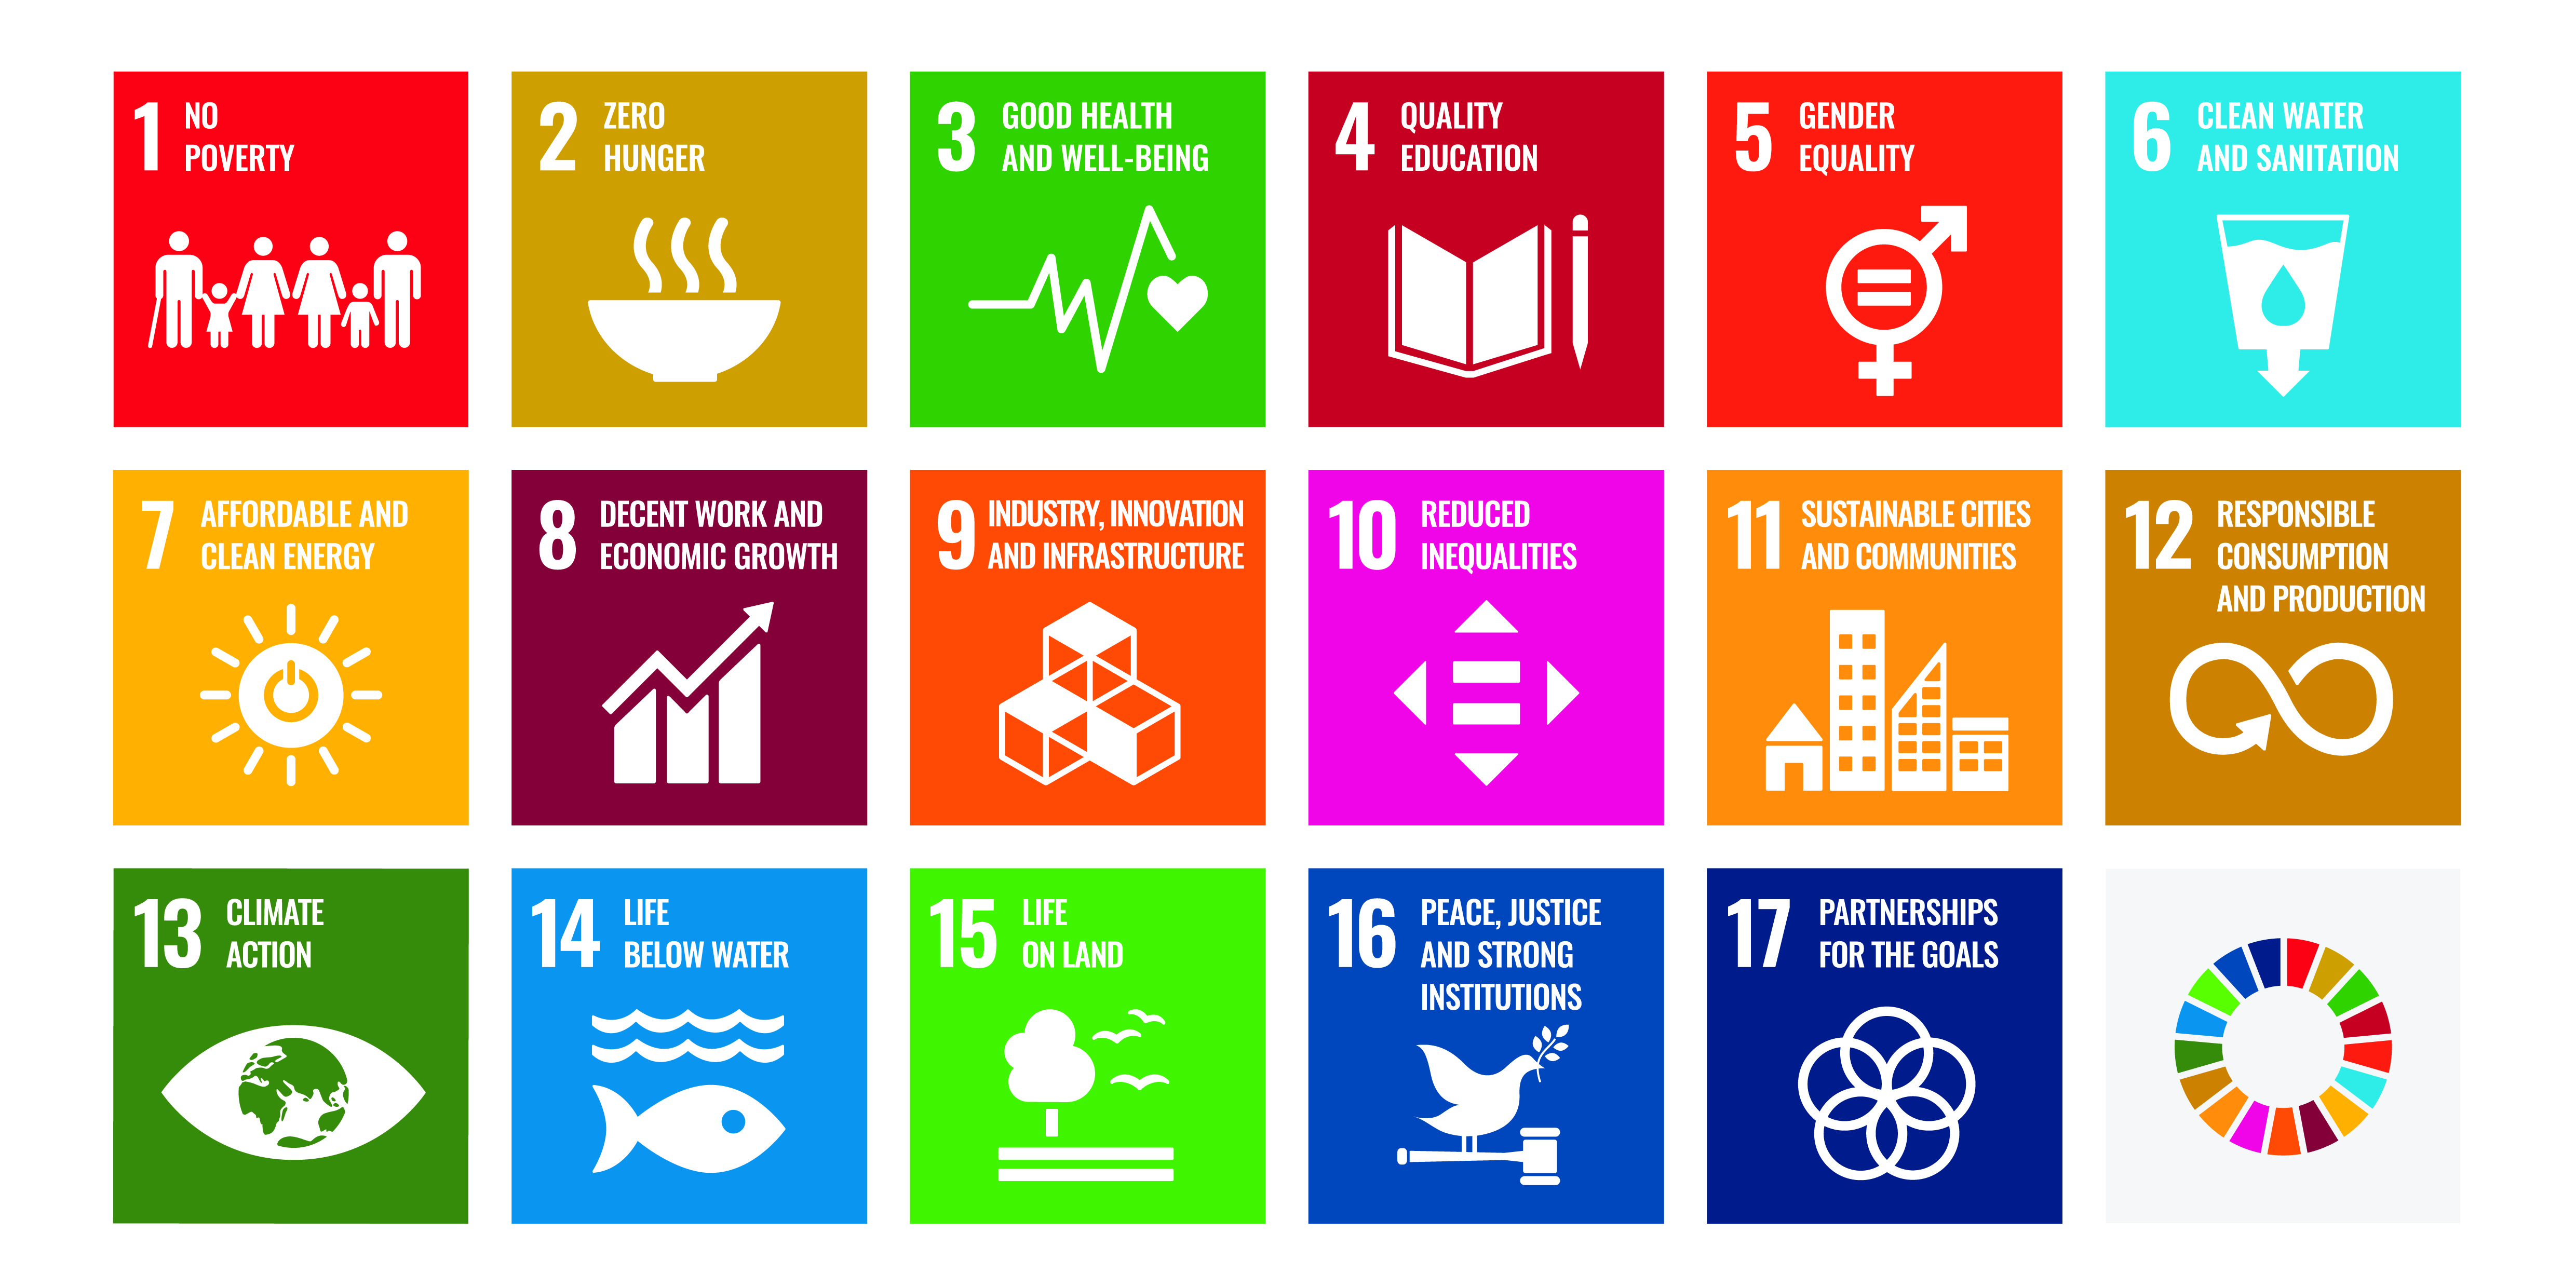 case study on achieving sustainable development goals